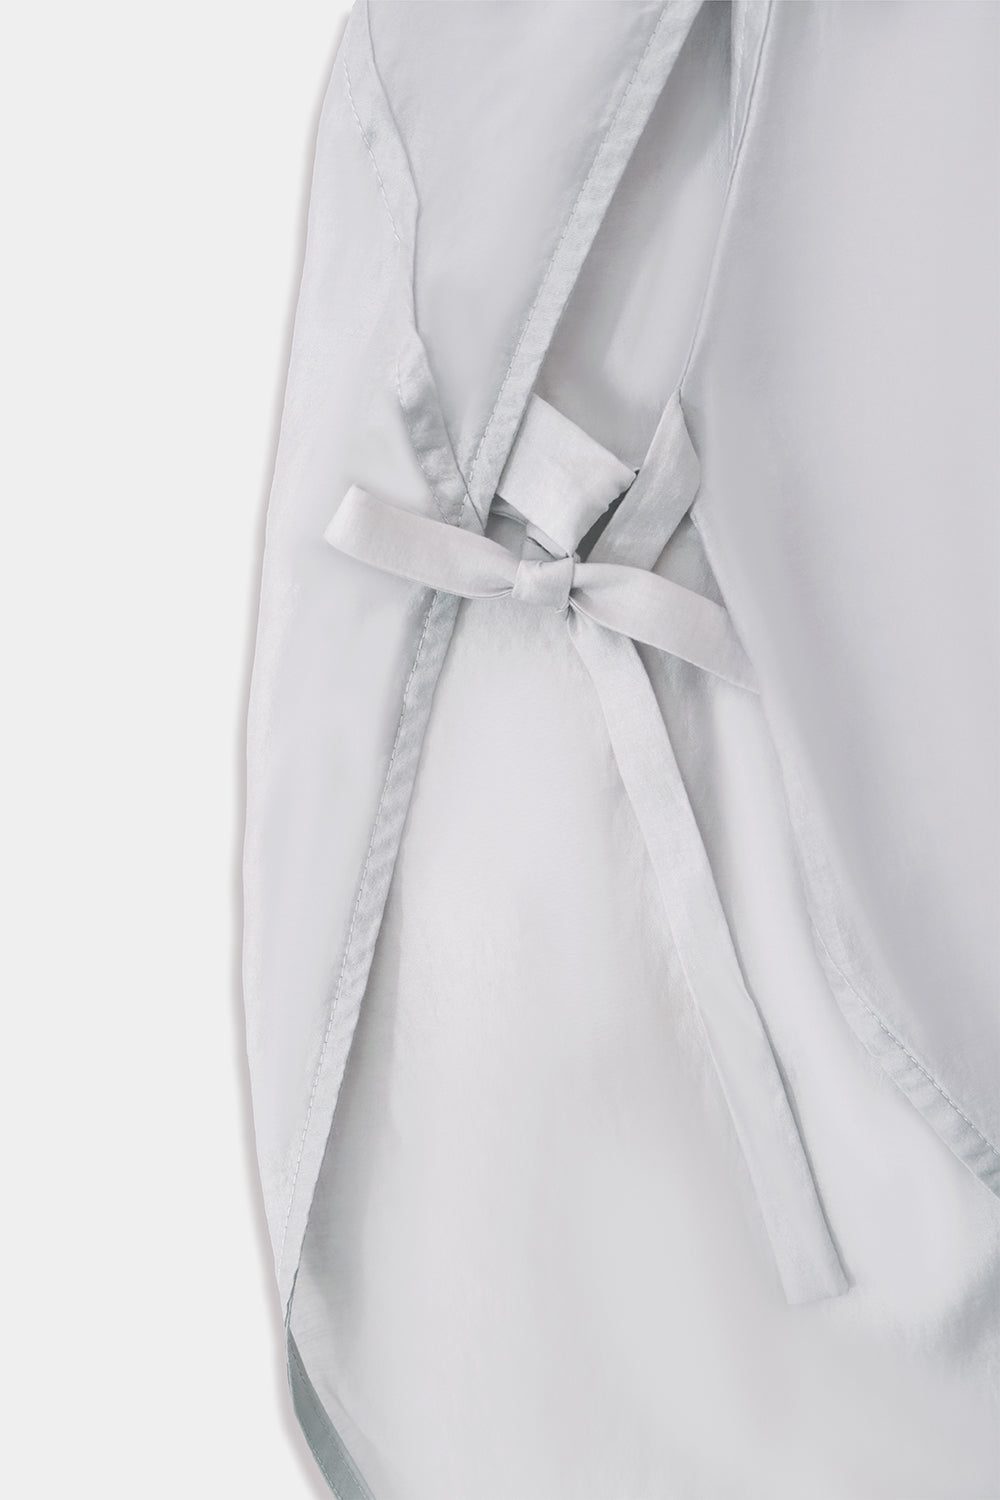 SEANNUNG - MEN - Double Layered Transparent Shoulder Detail Shirt 透膚層次披肩襯衫